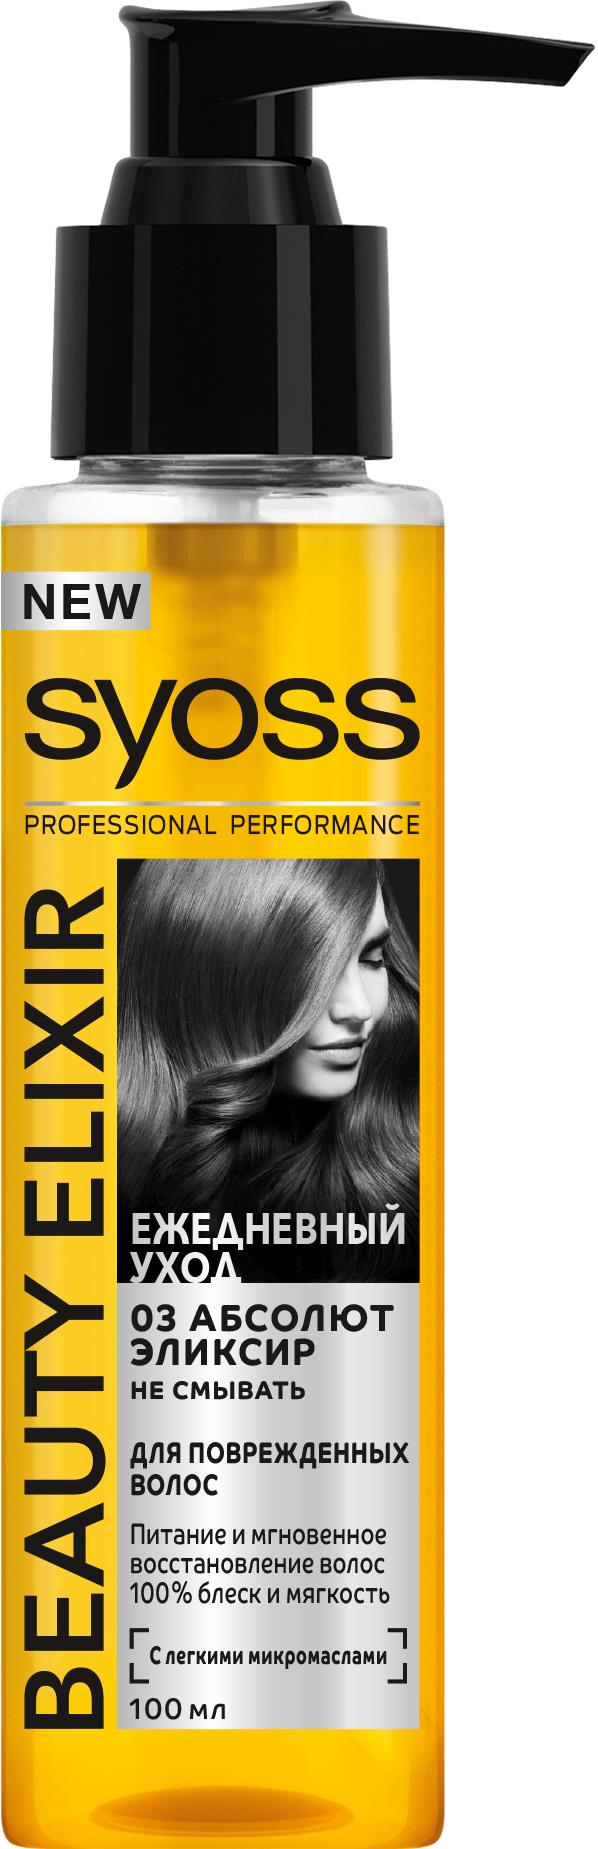 Syoss Эликсир с микромаслами “Beauty Elixir